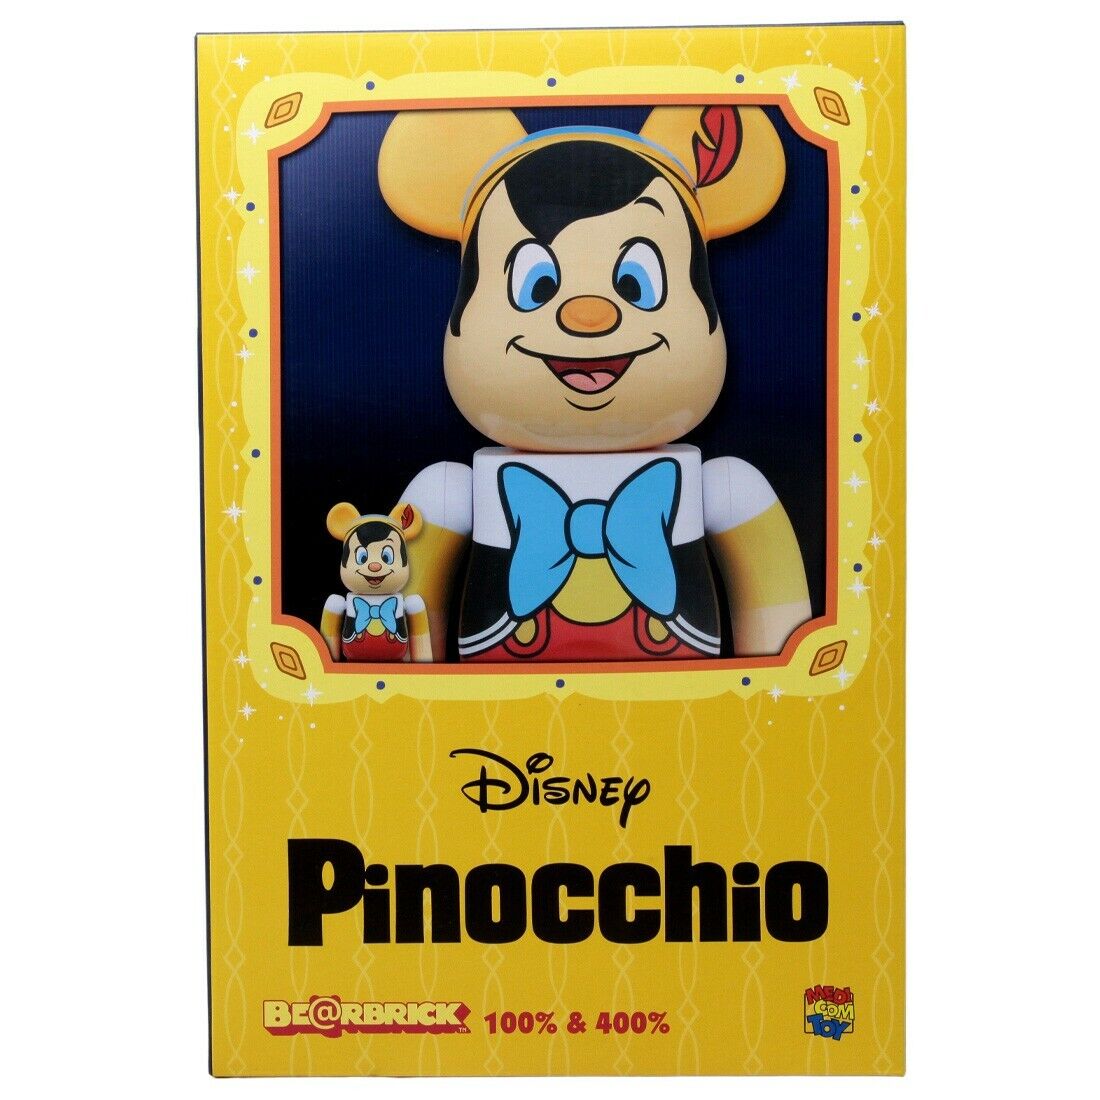 Medicom BE＠RBRICK Disney Pinocchio 100% 400% Bearbrick Figure Set